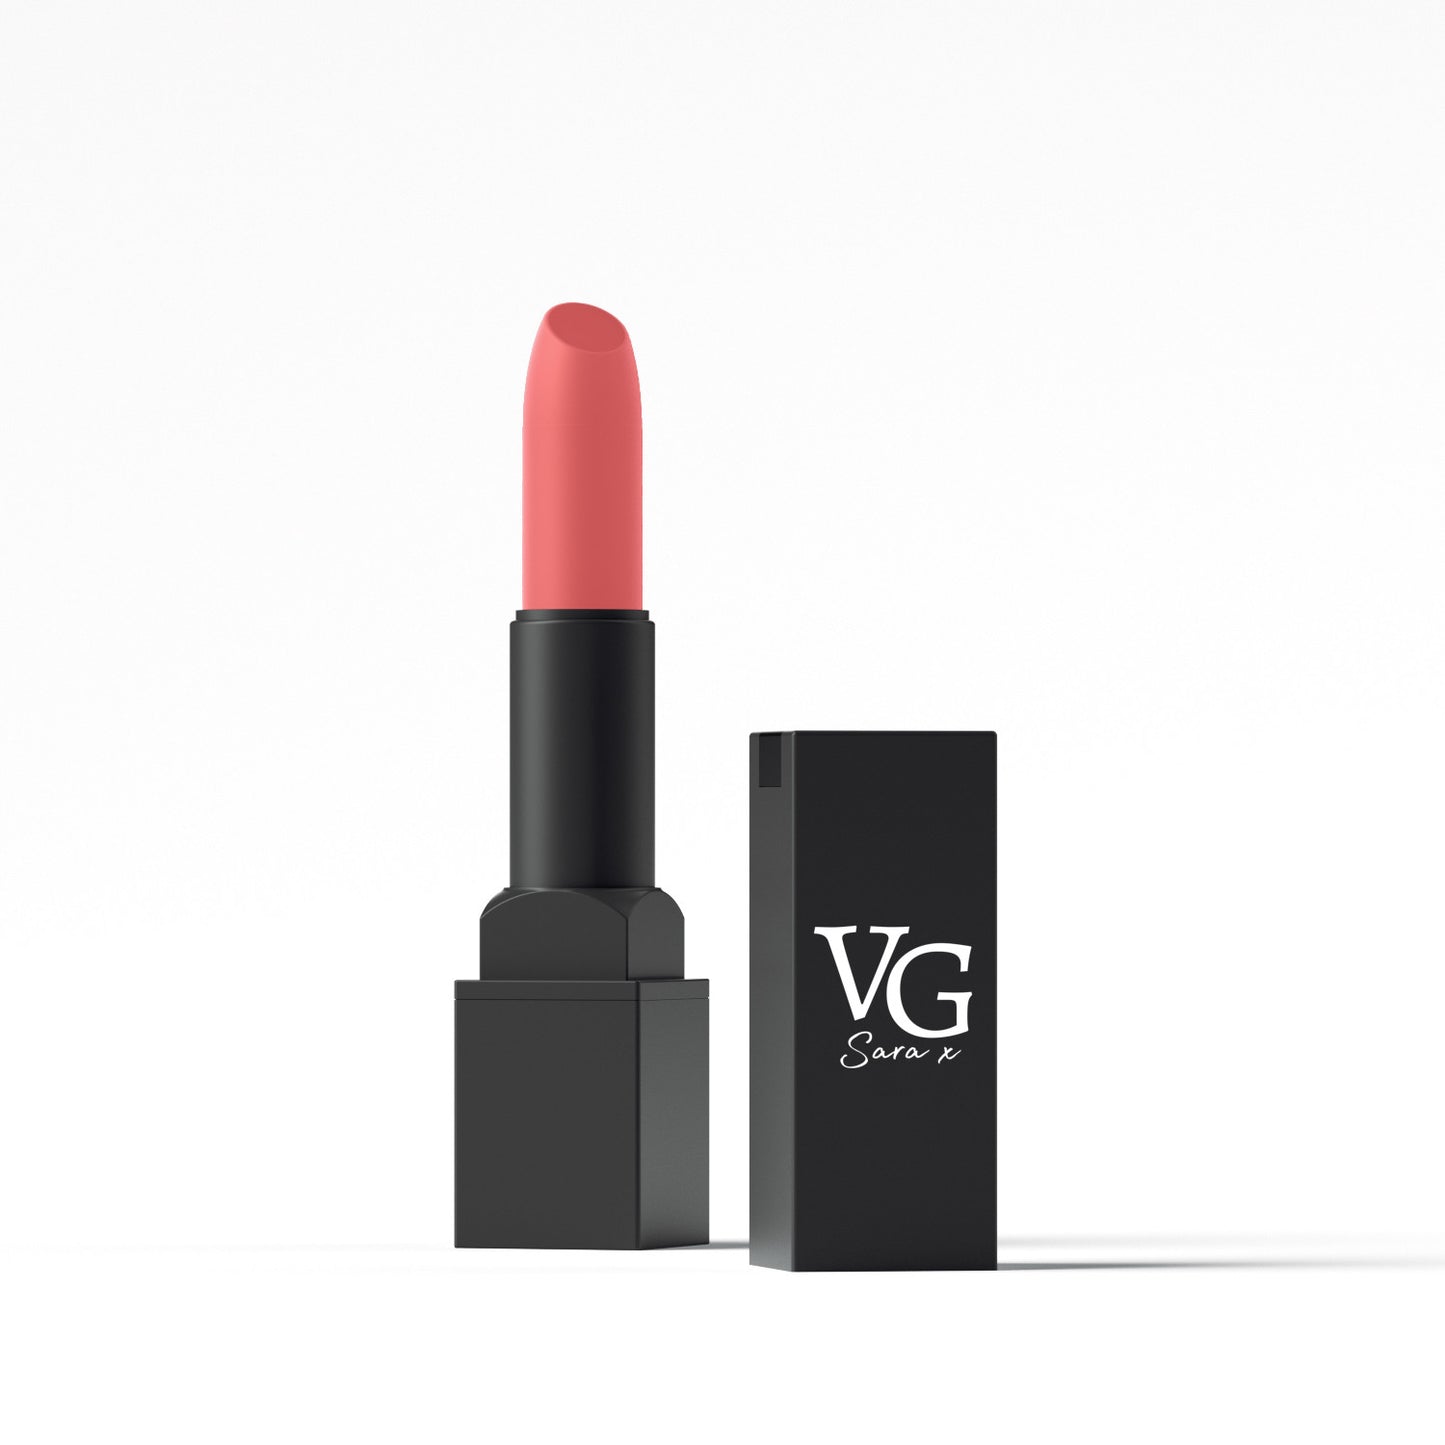 VG Cosmetics lipstick with vitamin E and VG Sara x brand detail